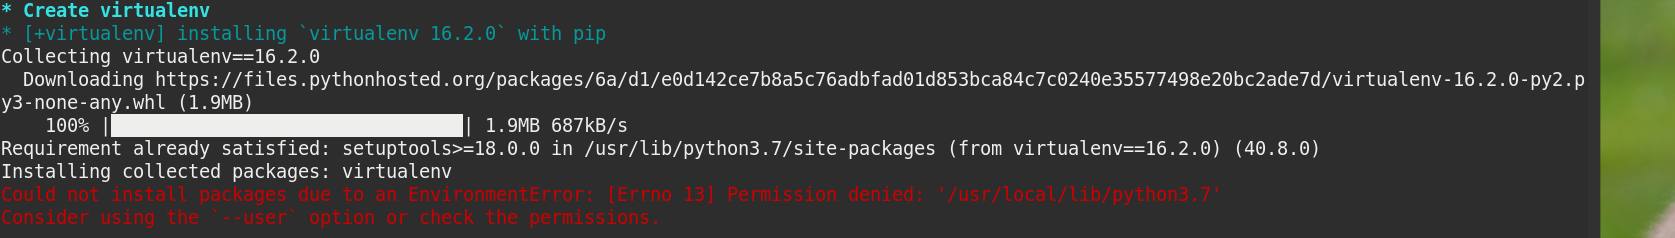 pip3_virtualenv_zds_install_error.png